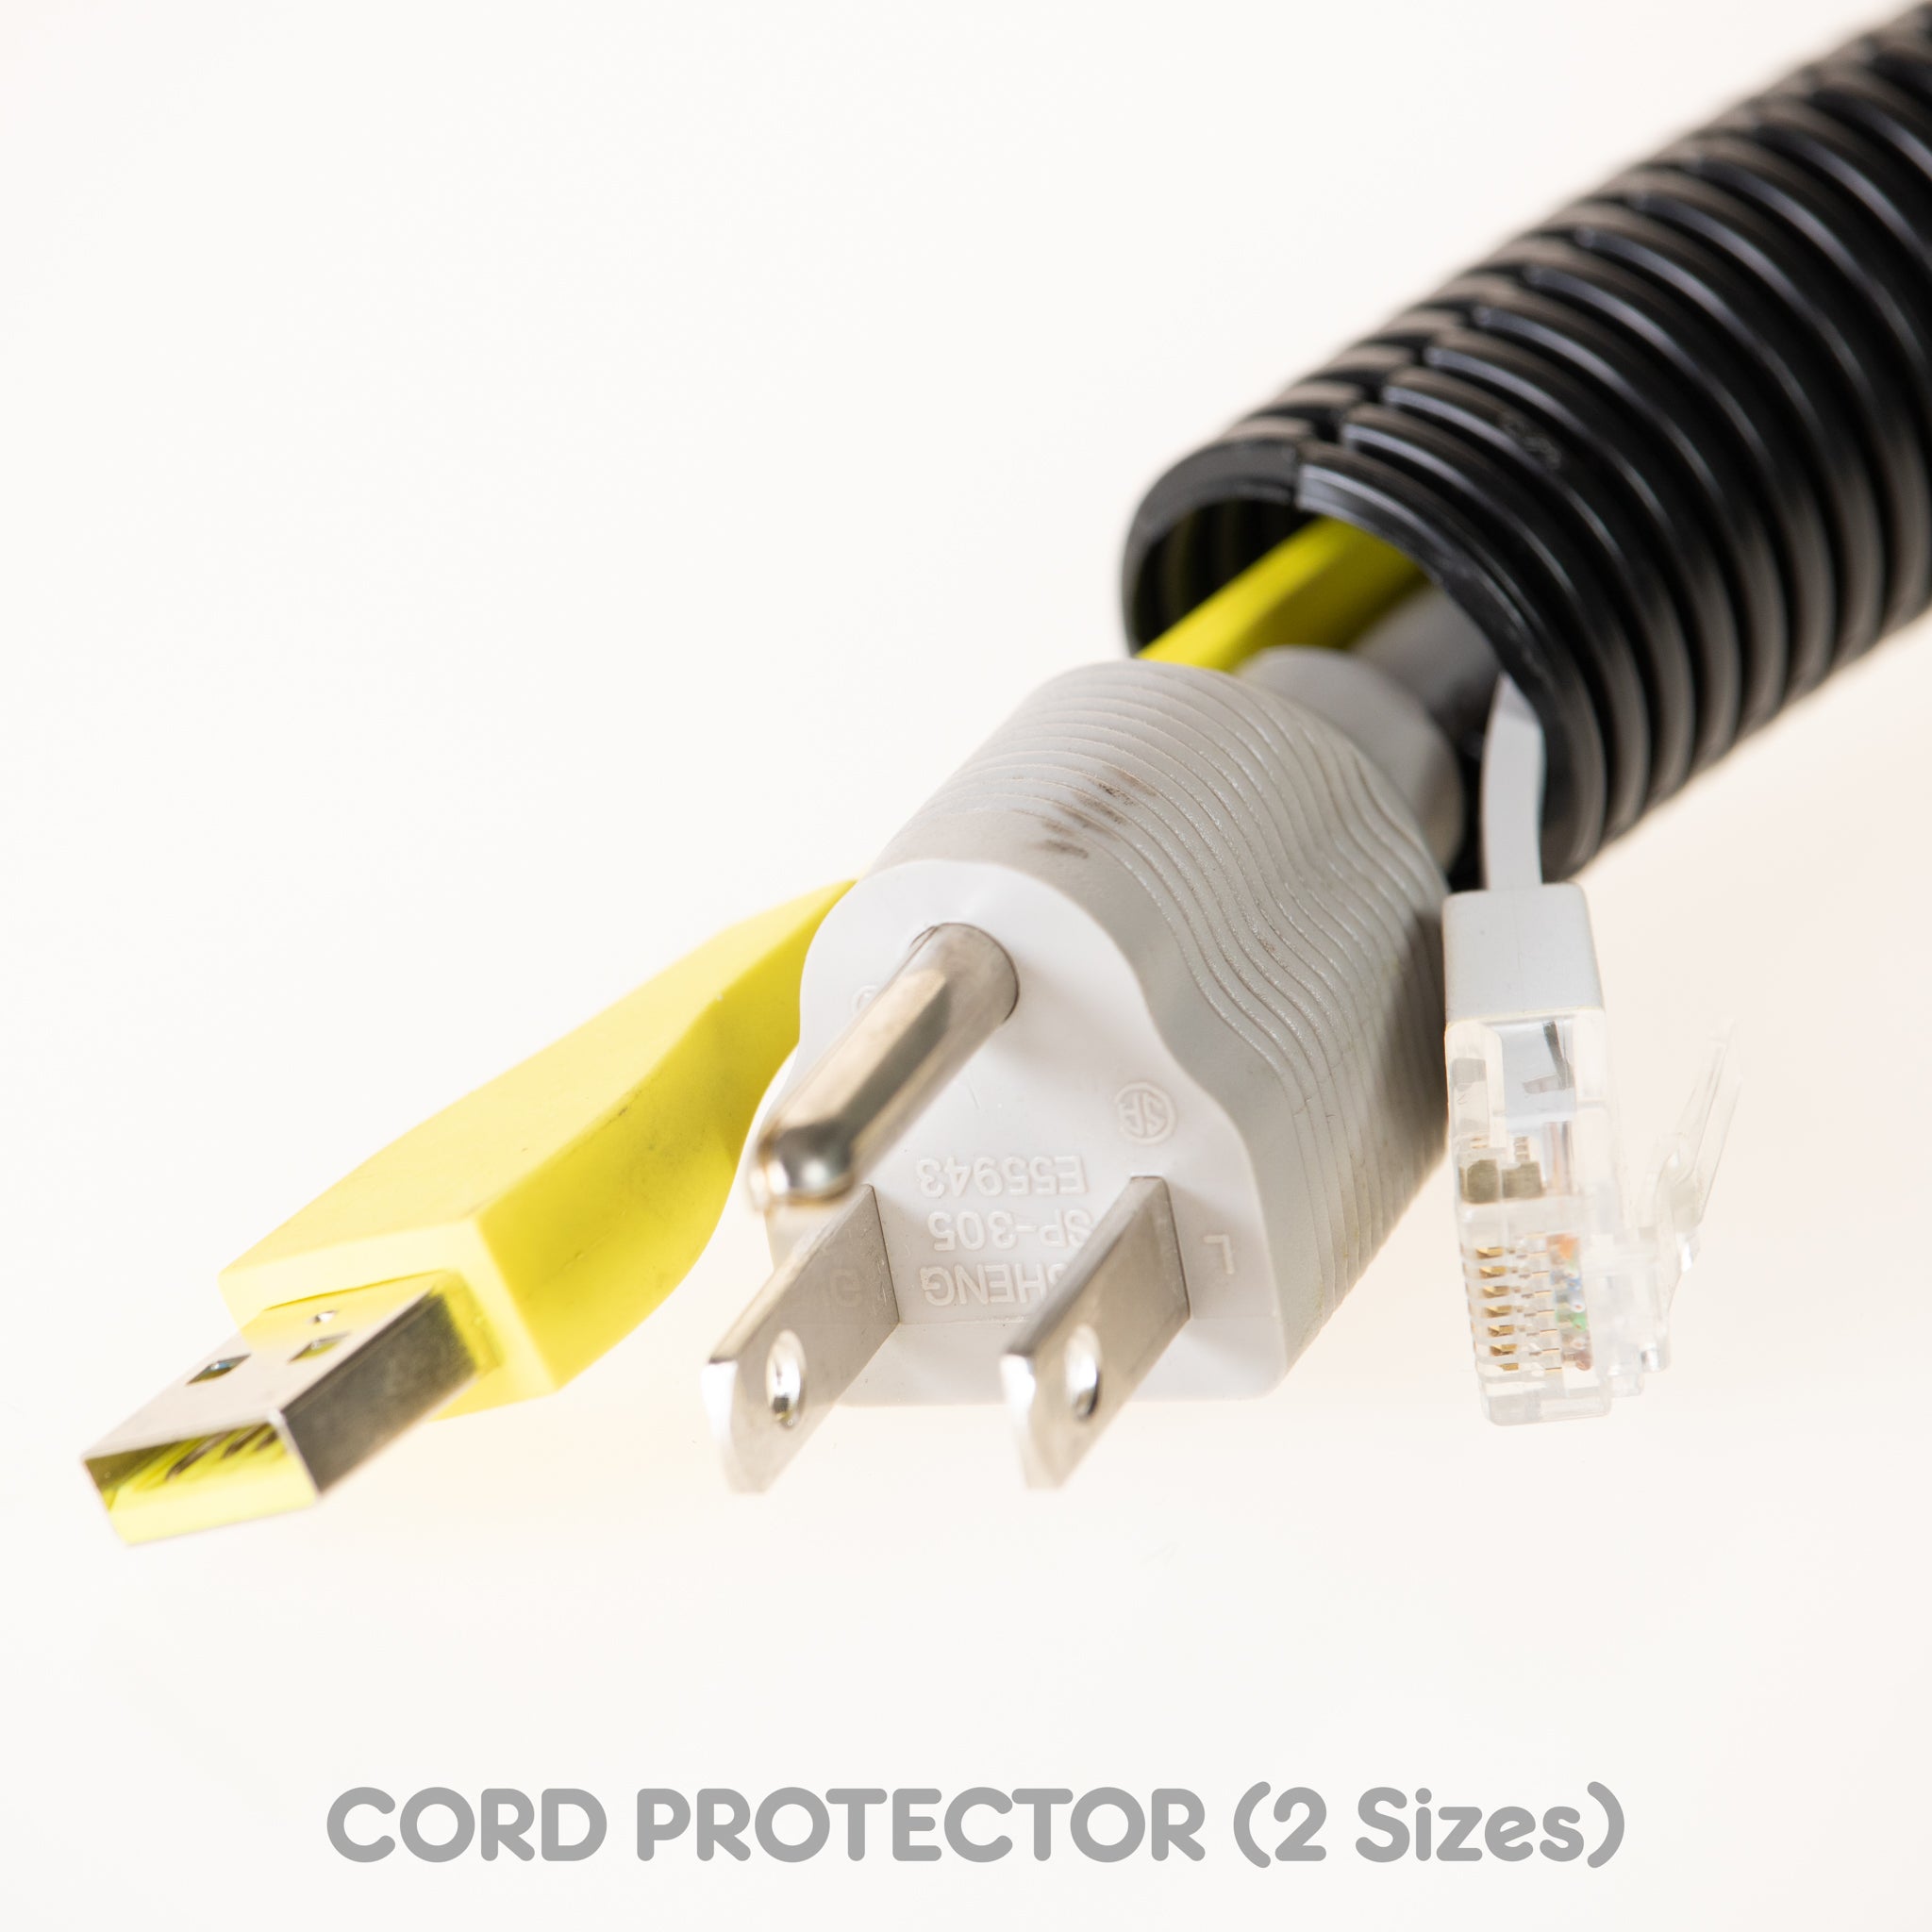 ClickShield Extension Cord Protector - My Pet Chicken